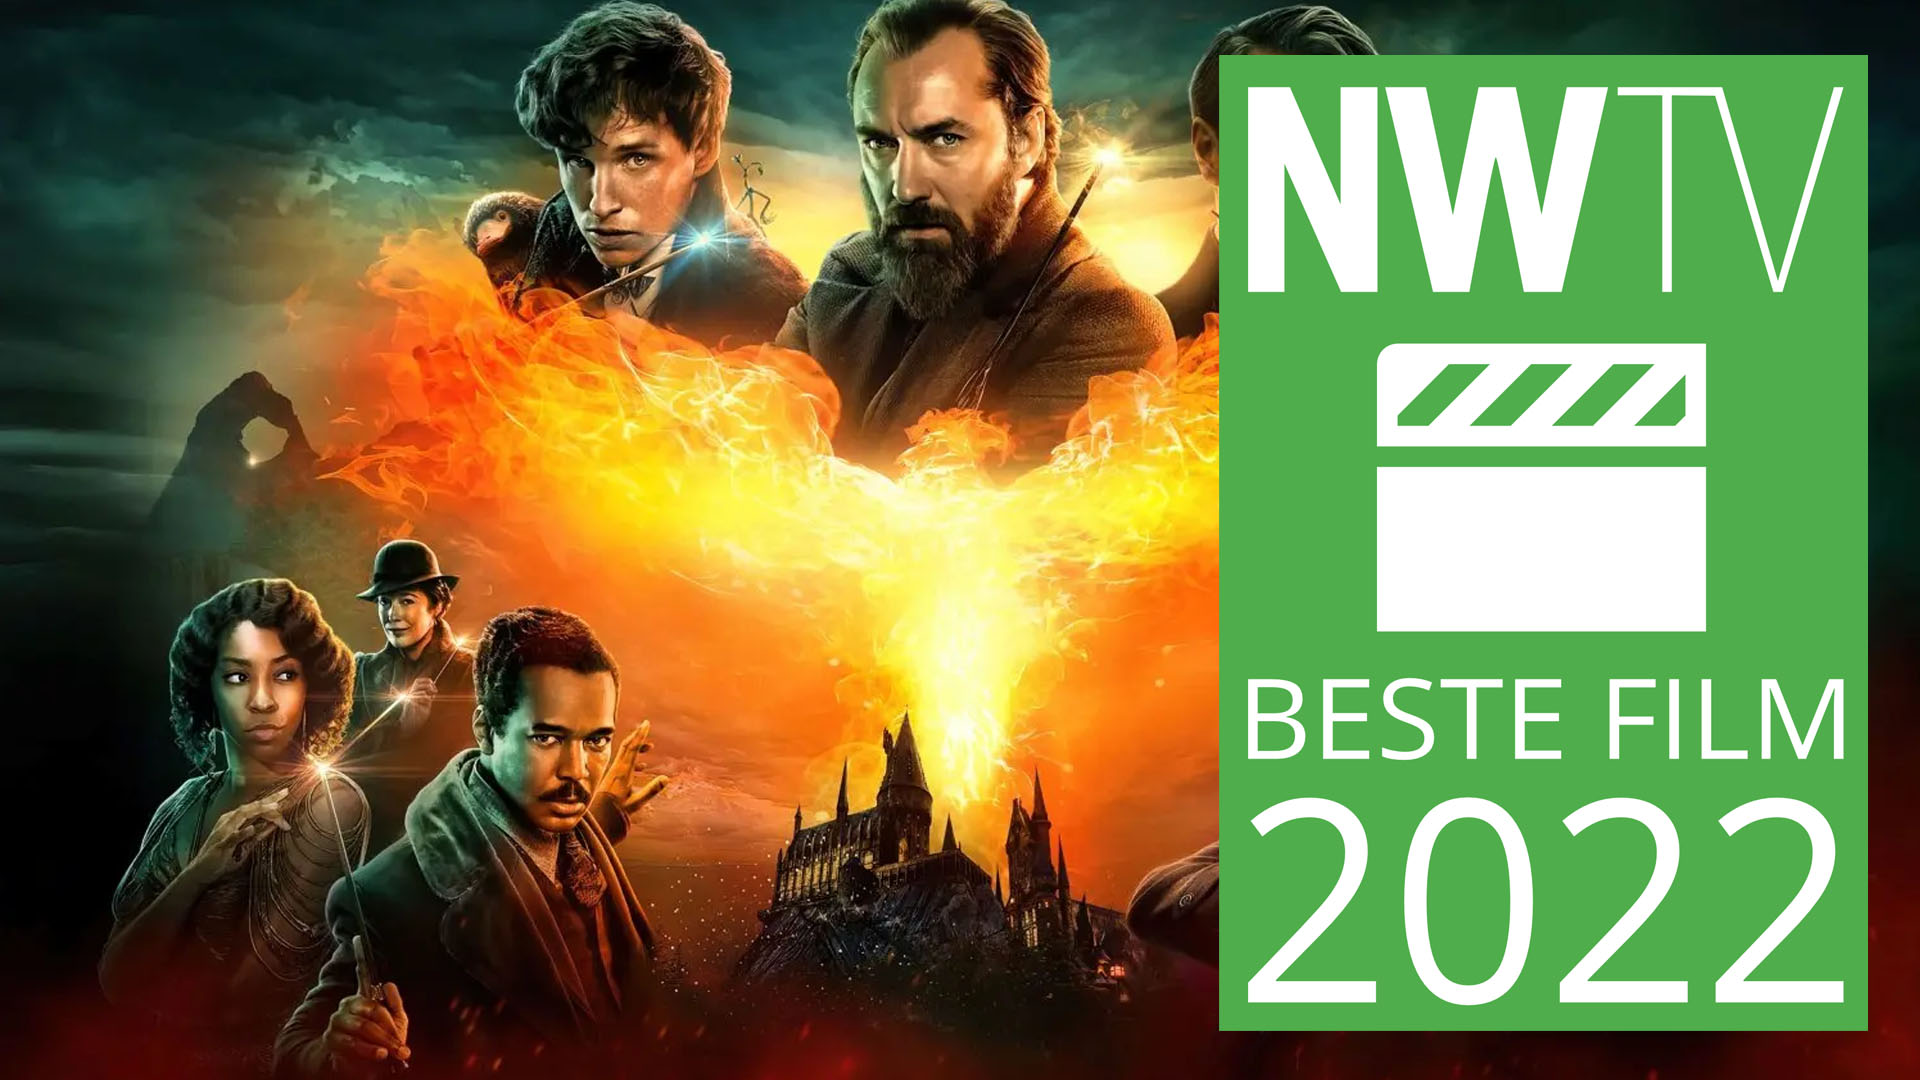 NWTV-Awards 2022: Fantastic Beasts: The Secrets of Dumbledore is de beste film van 2022